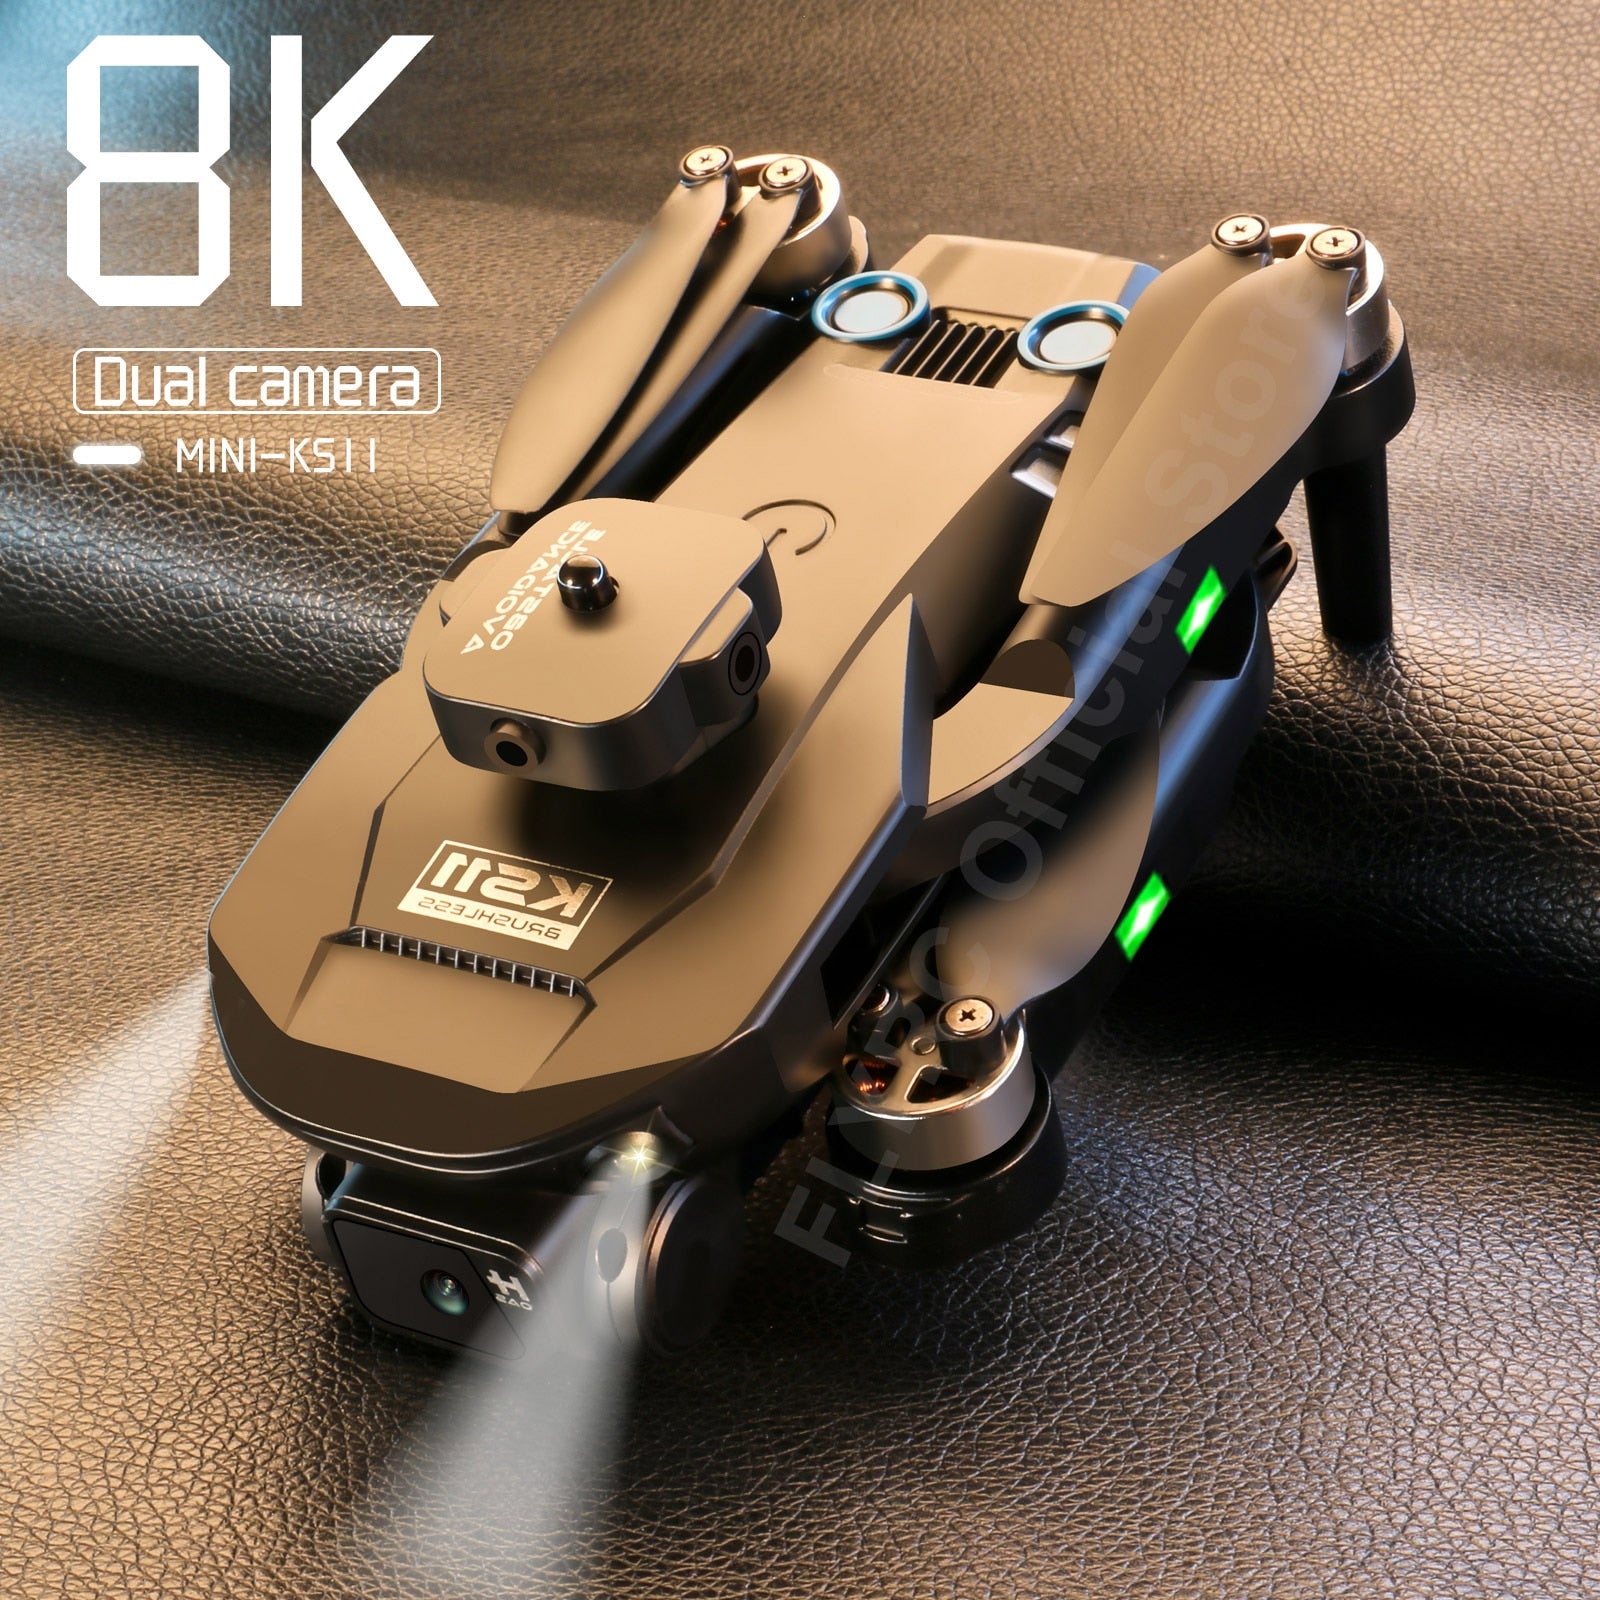 Mini Drone Professionnel 8K 2,4 GHz UHD Double Caméra